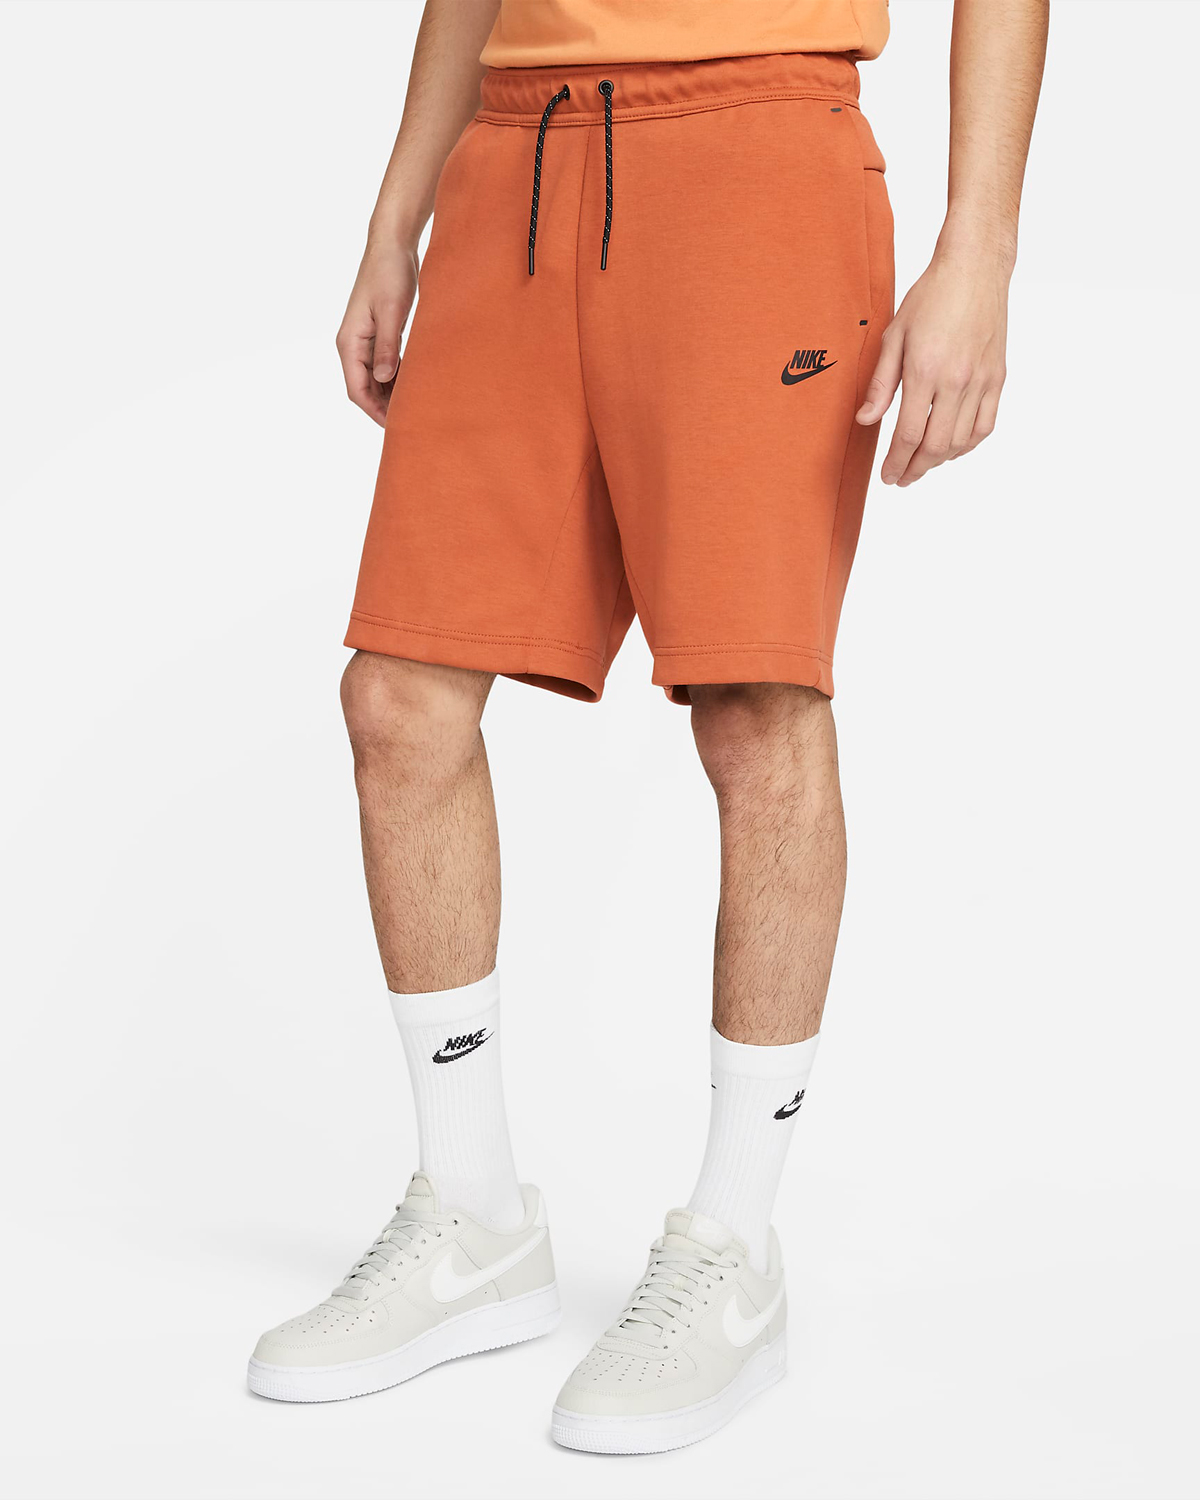 Nike Tech Fleece Clothing Burnt Sunrise Hoodies Pants Shorts